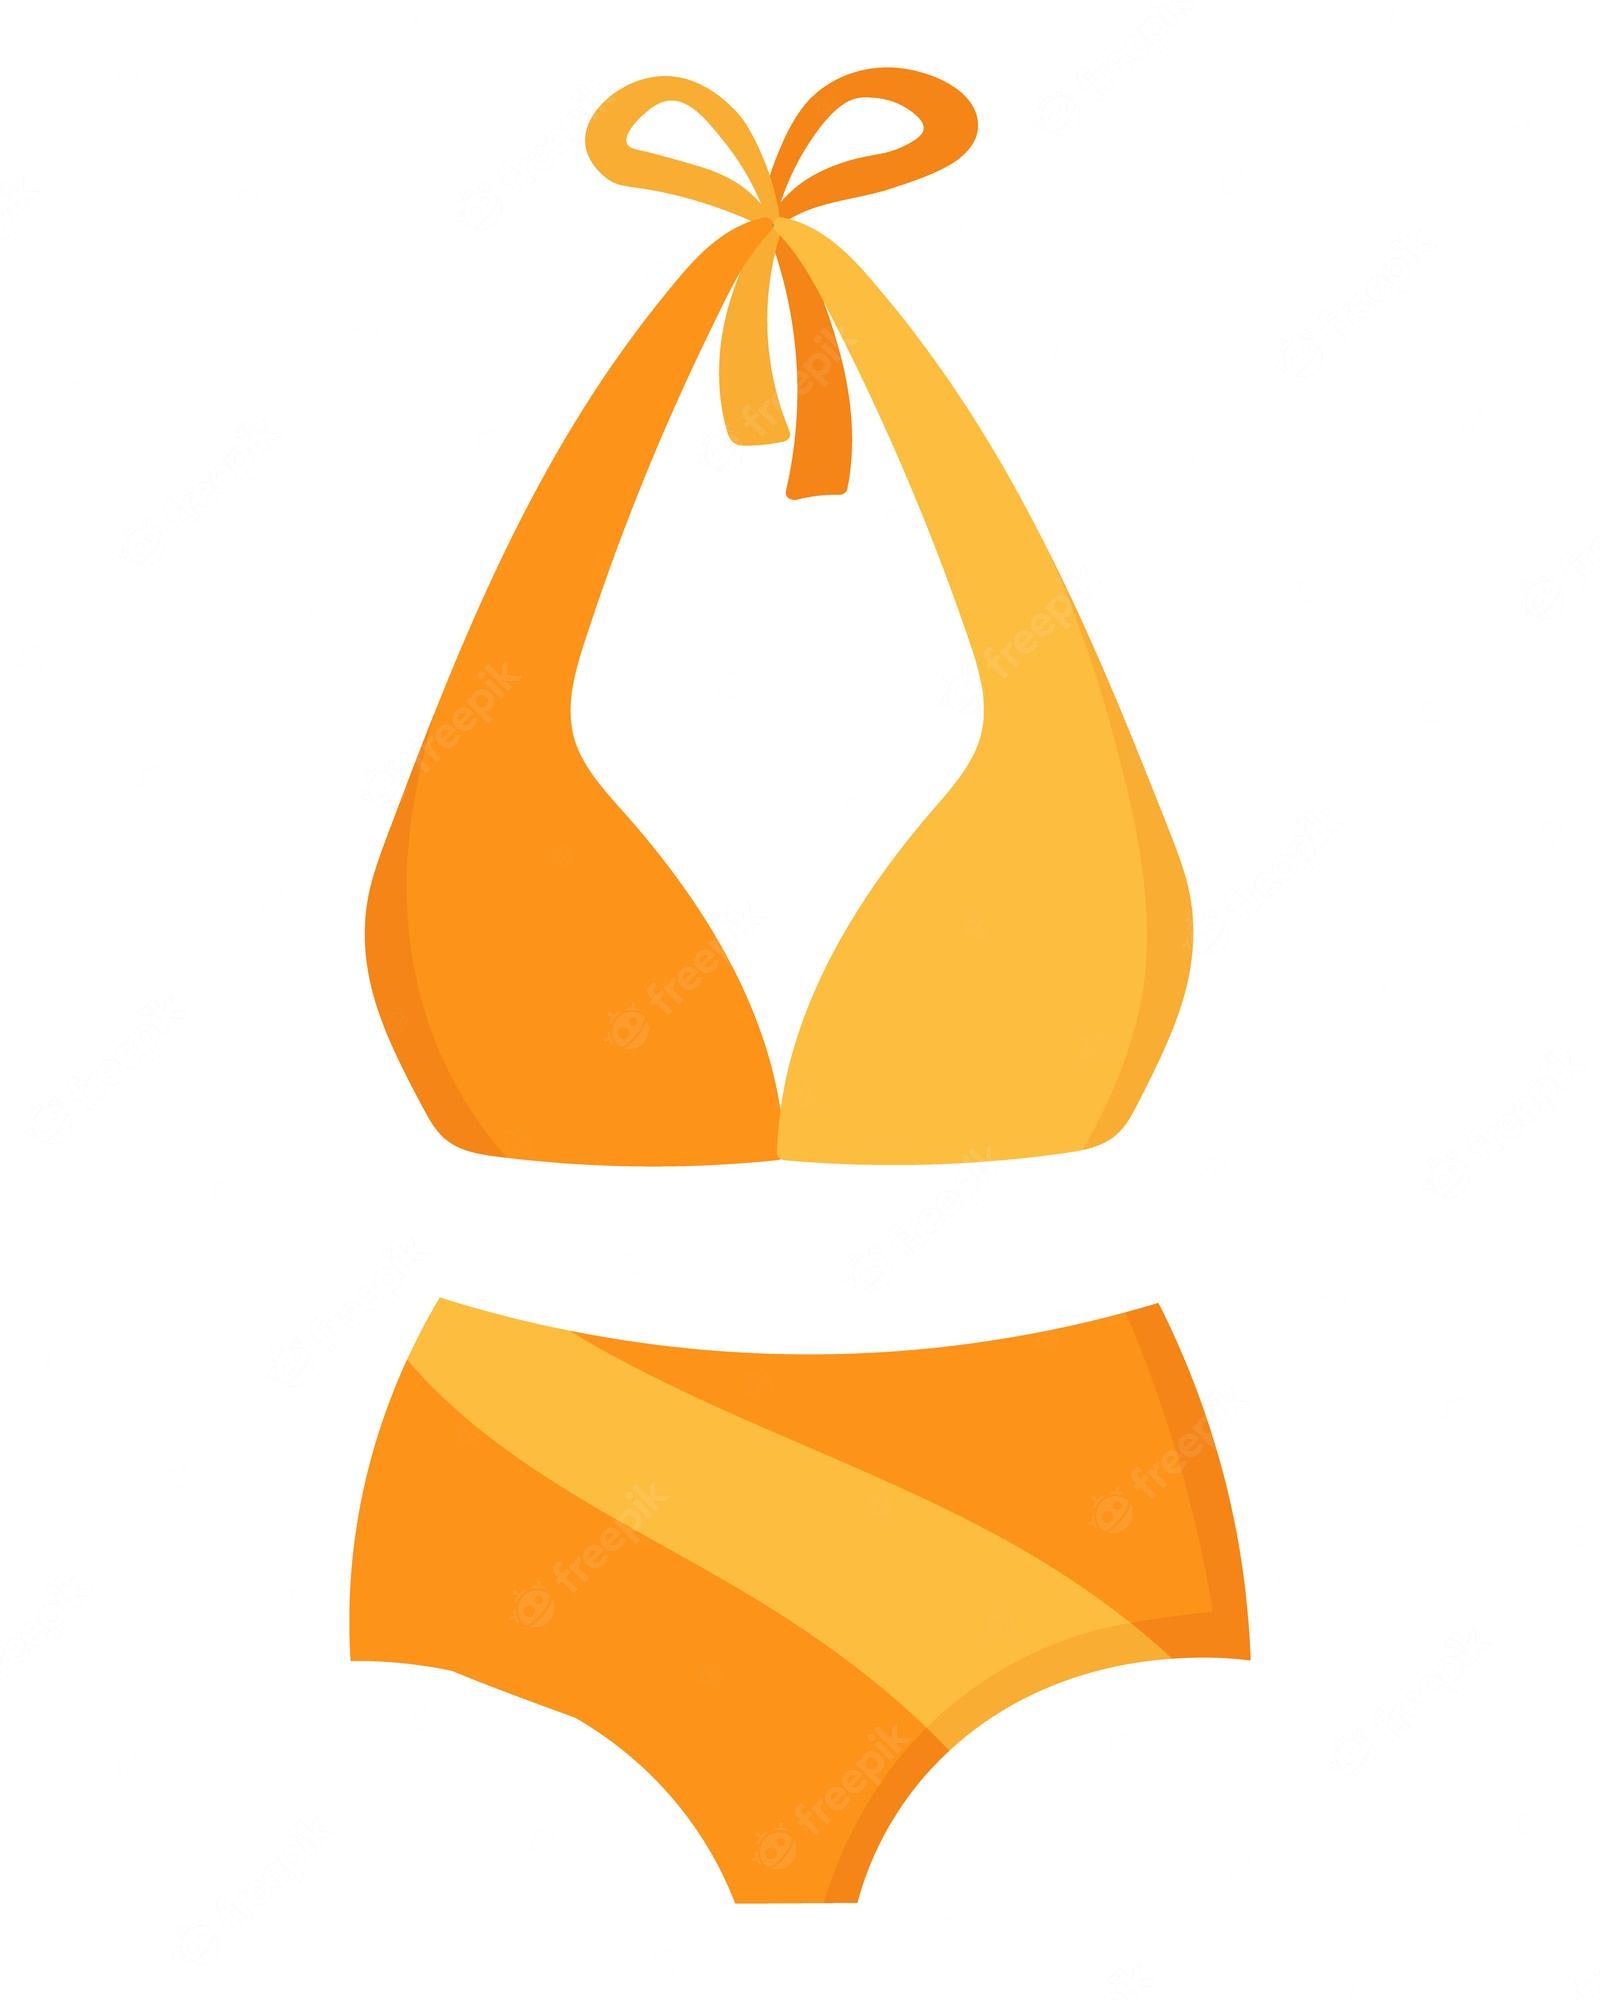 Happy Women Underwear Images - Free Download on Freepik